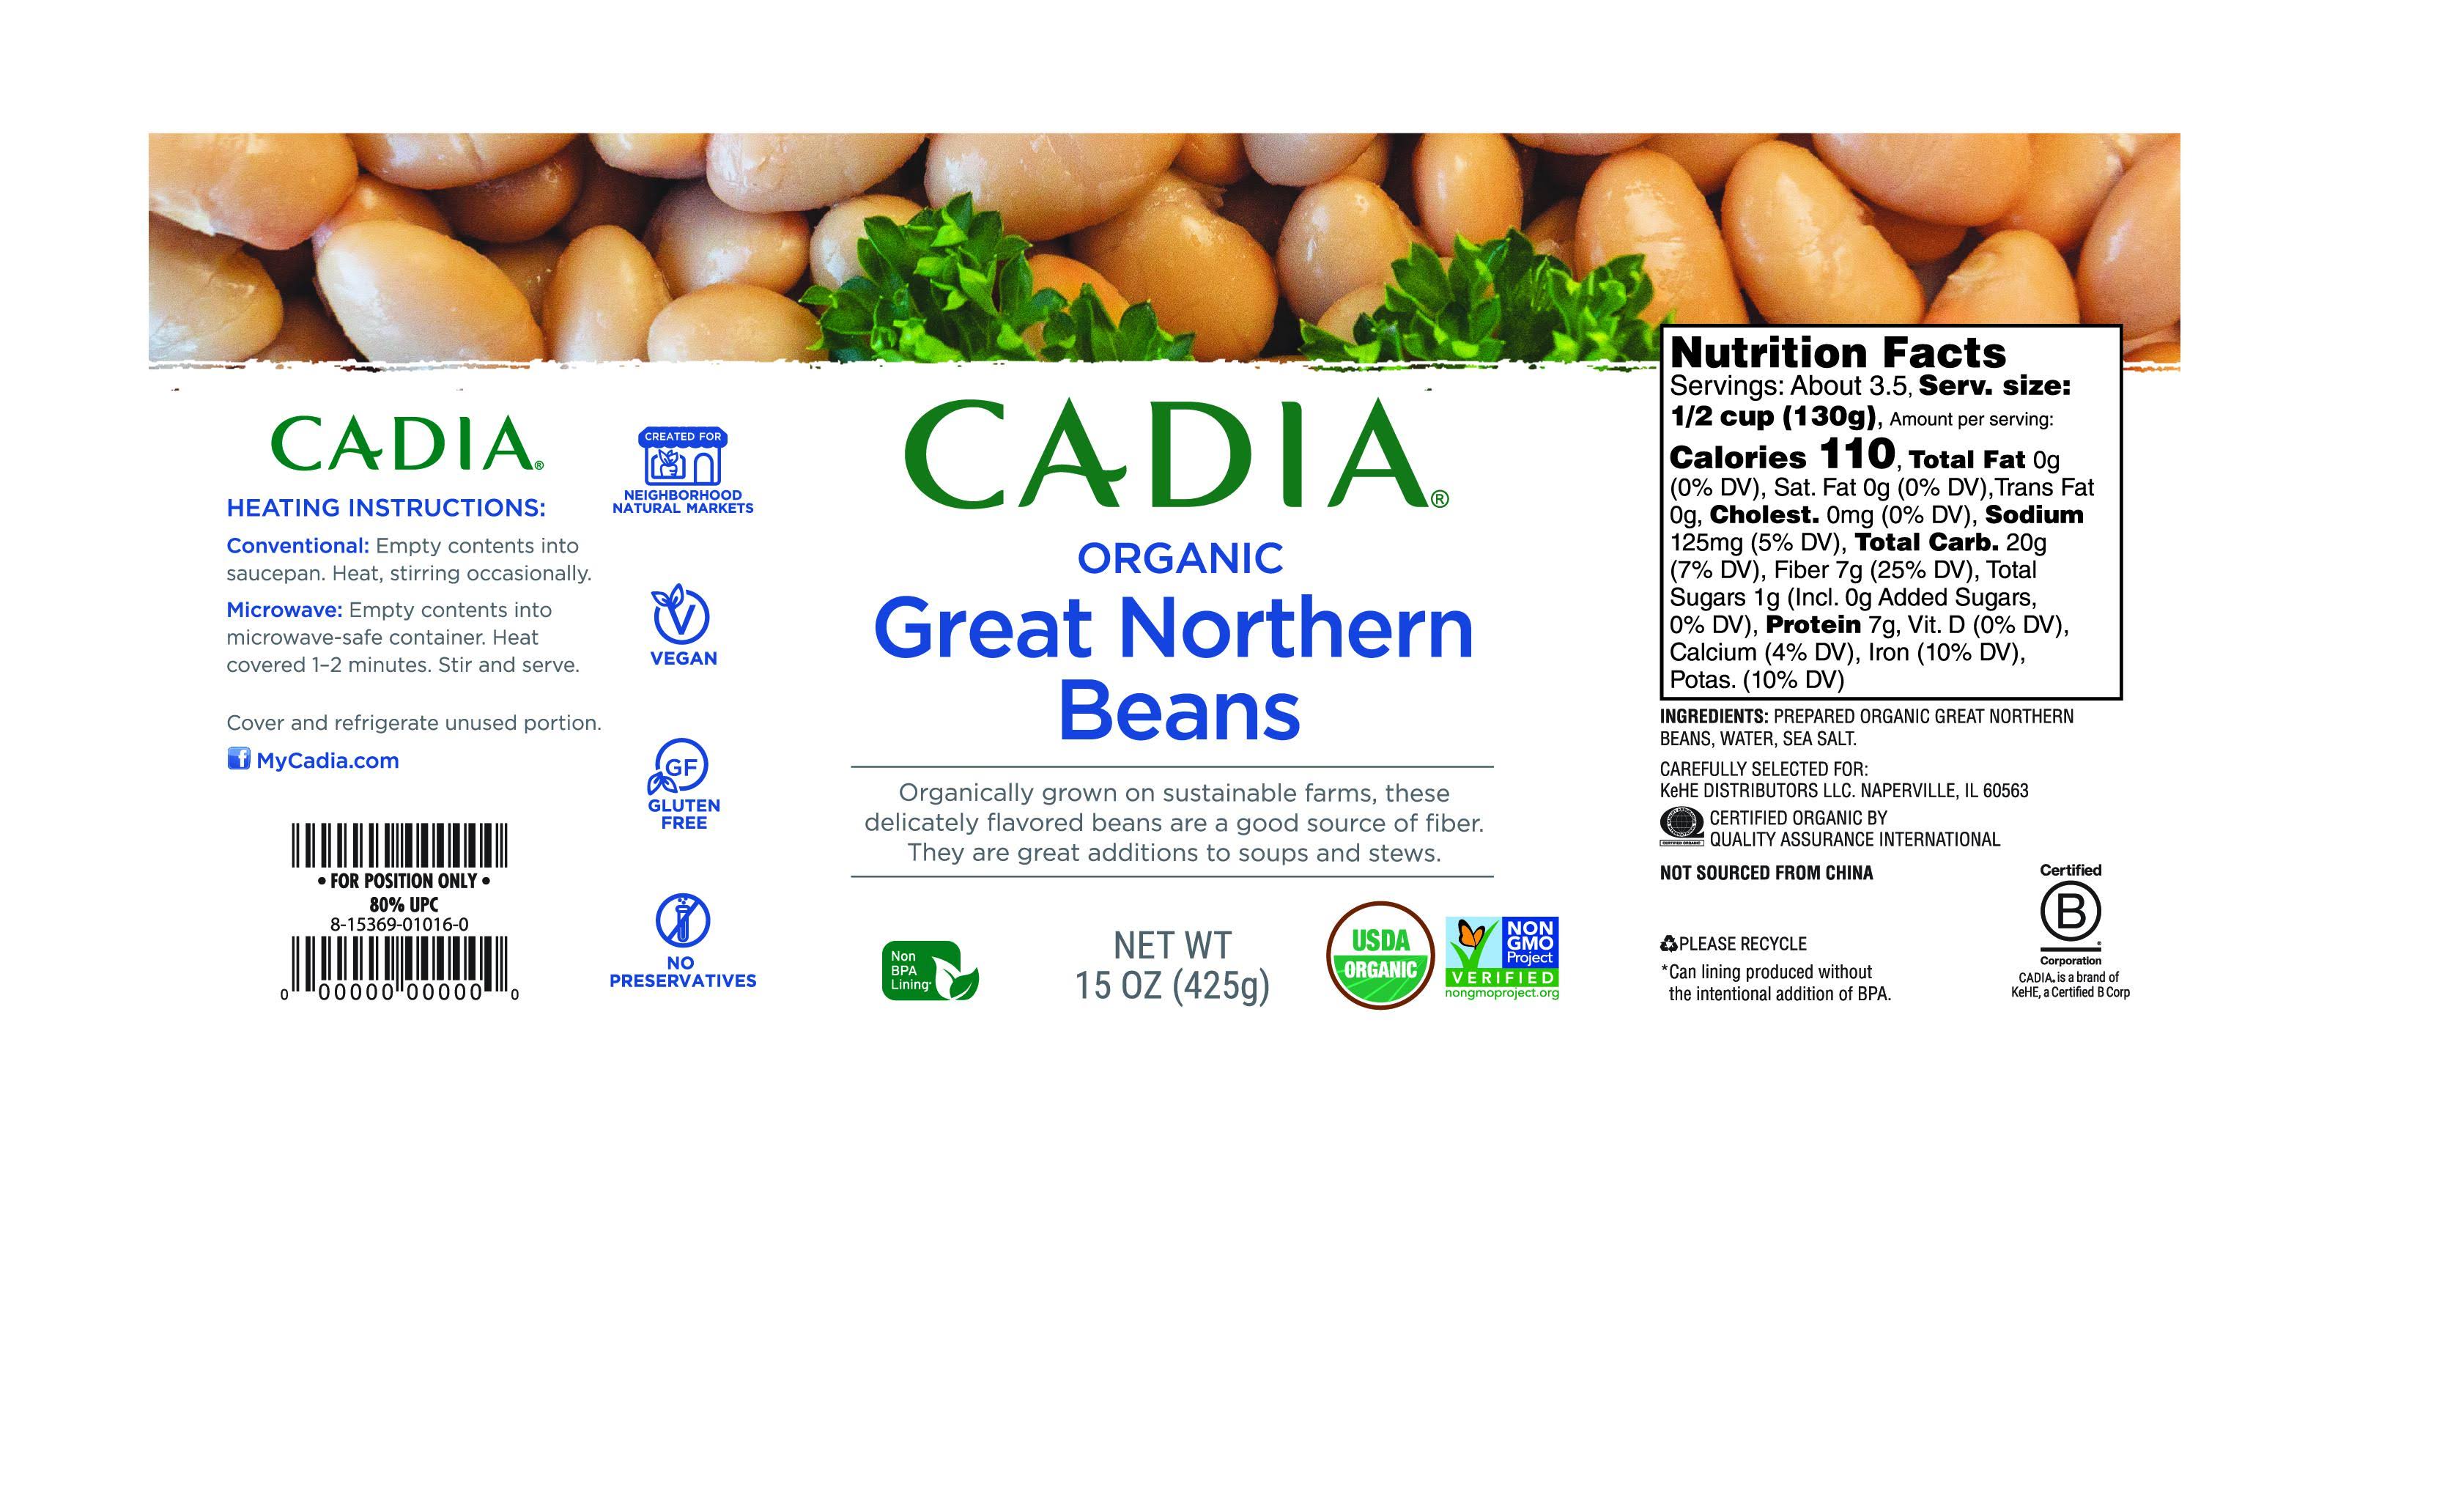 Cadia Great Northern Beans, Organic - 15 oz